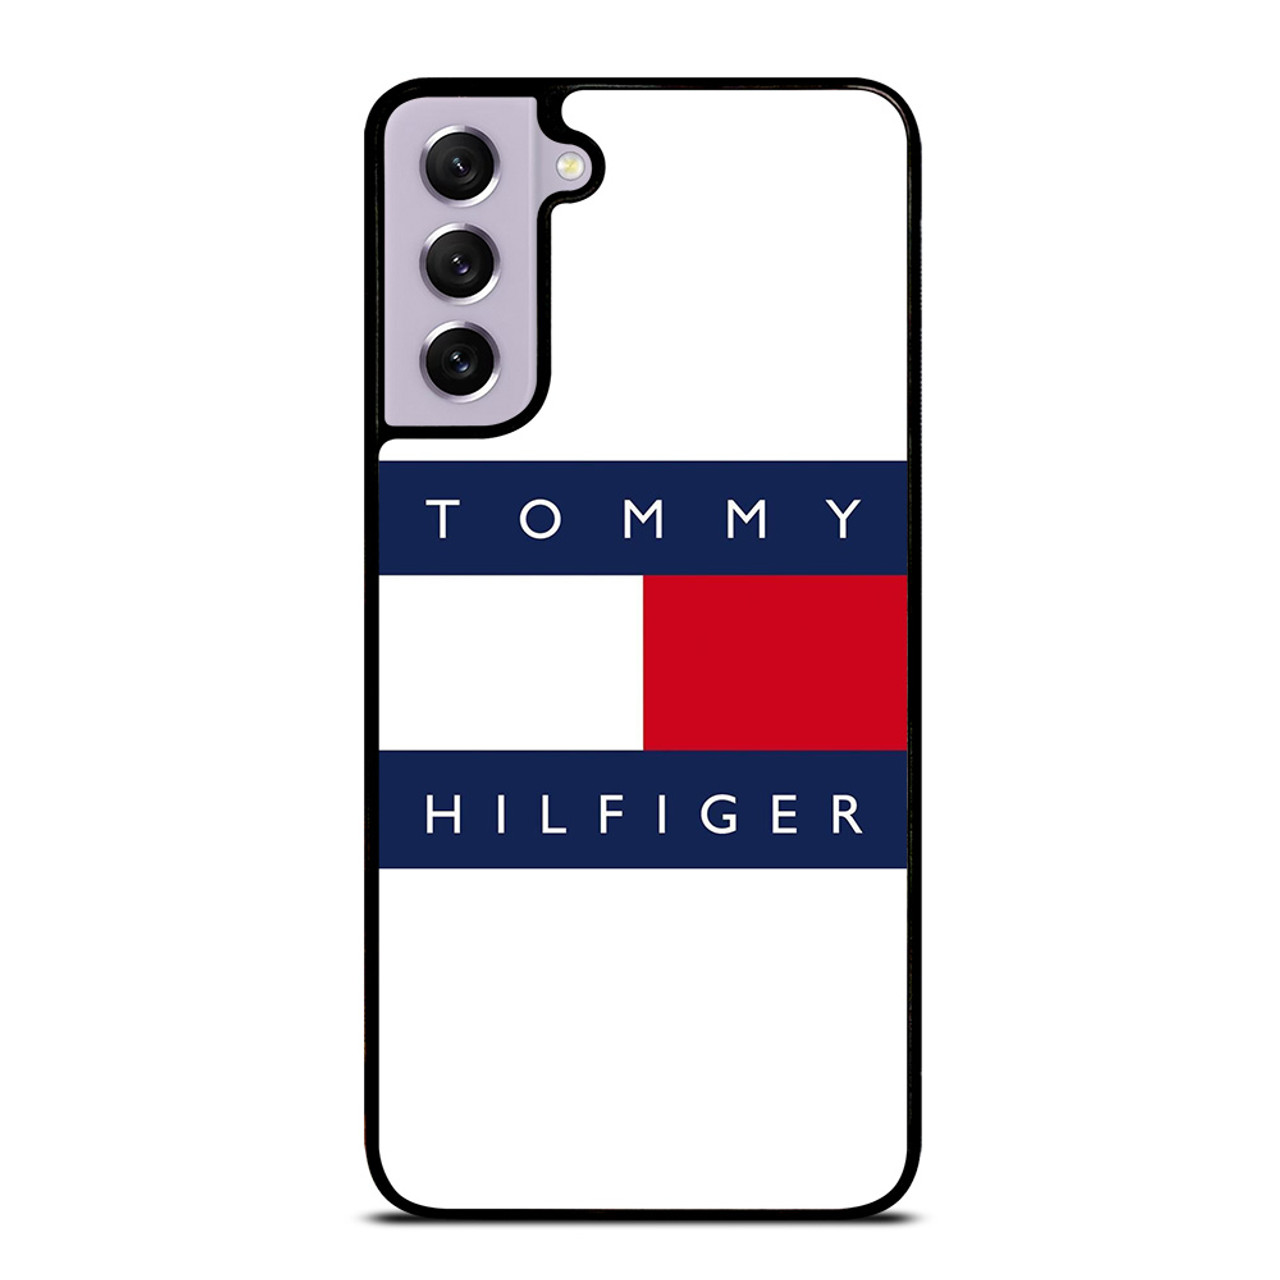 TOMMY HILFIGER LOGO Samsung Galaxy S21 FE Case Cover